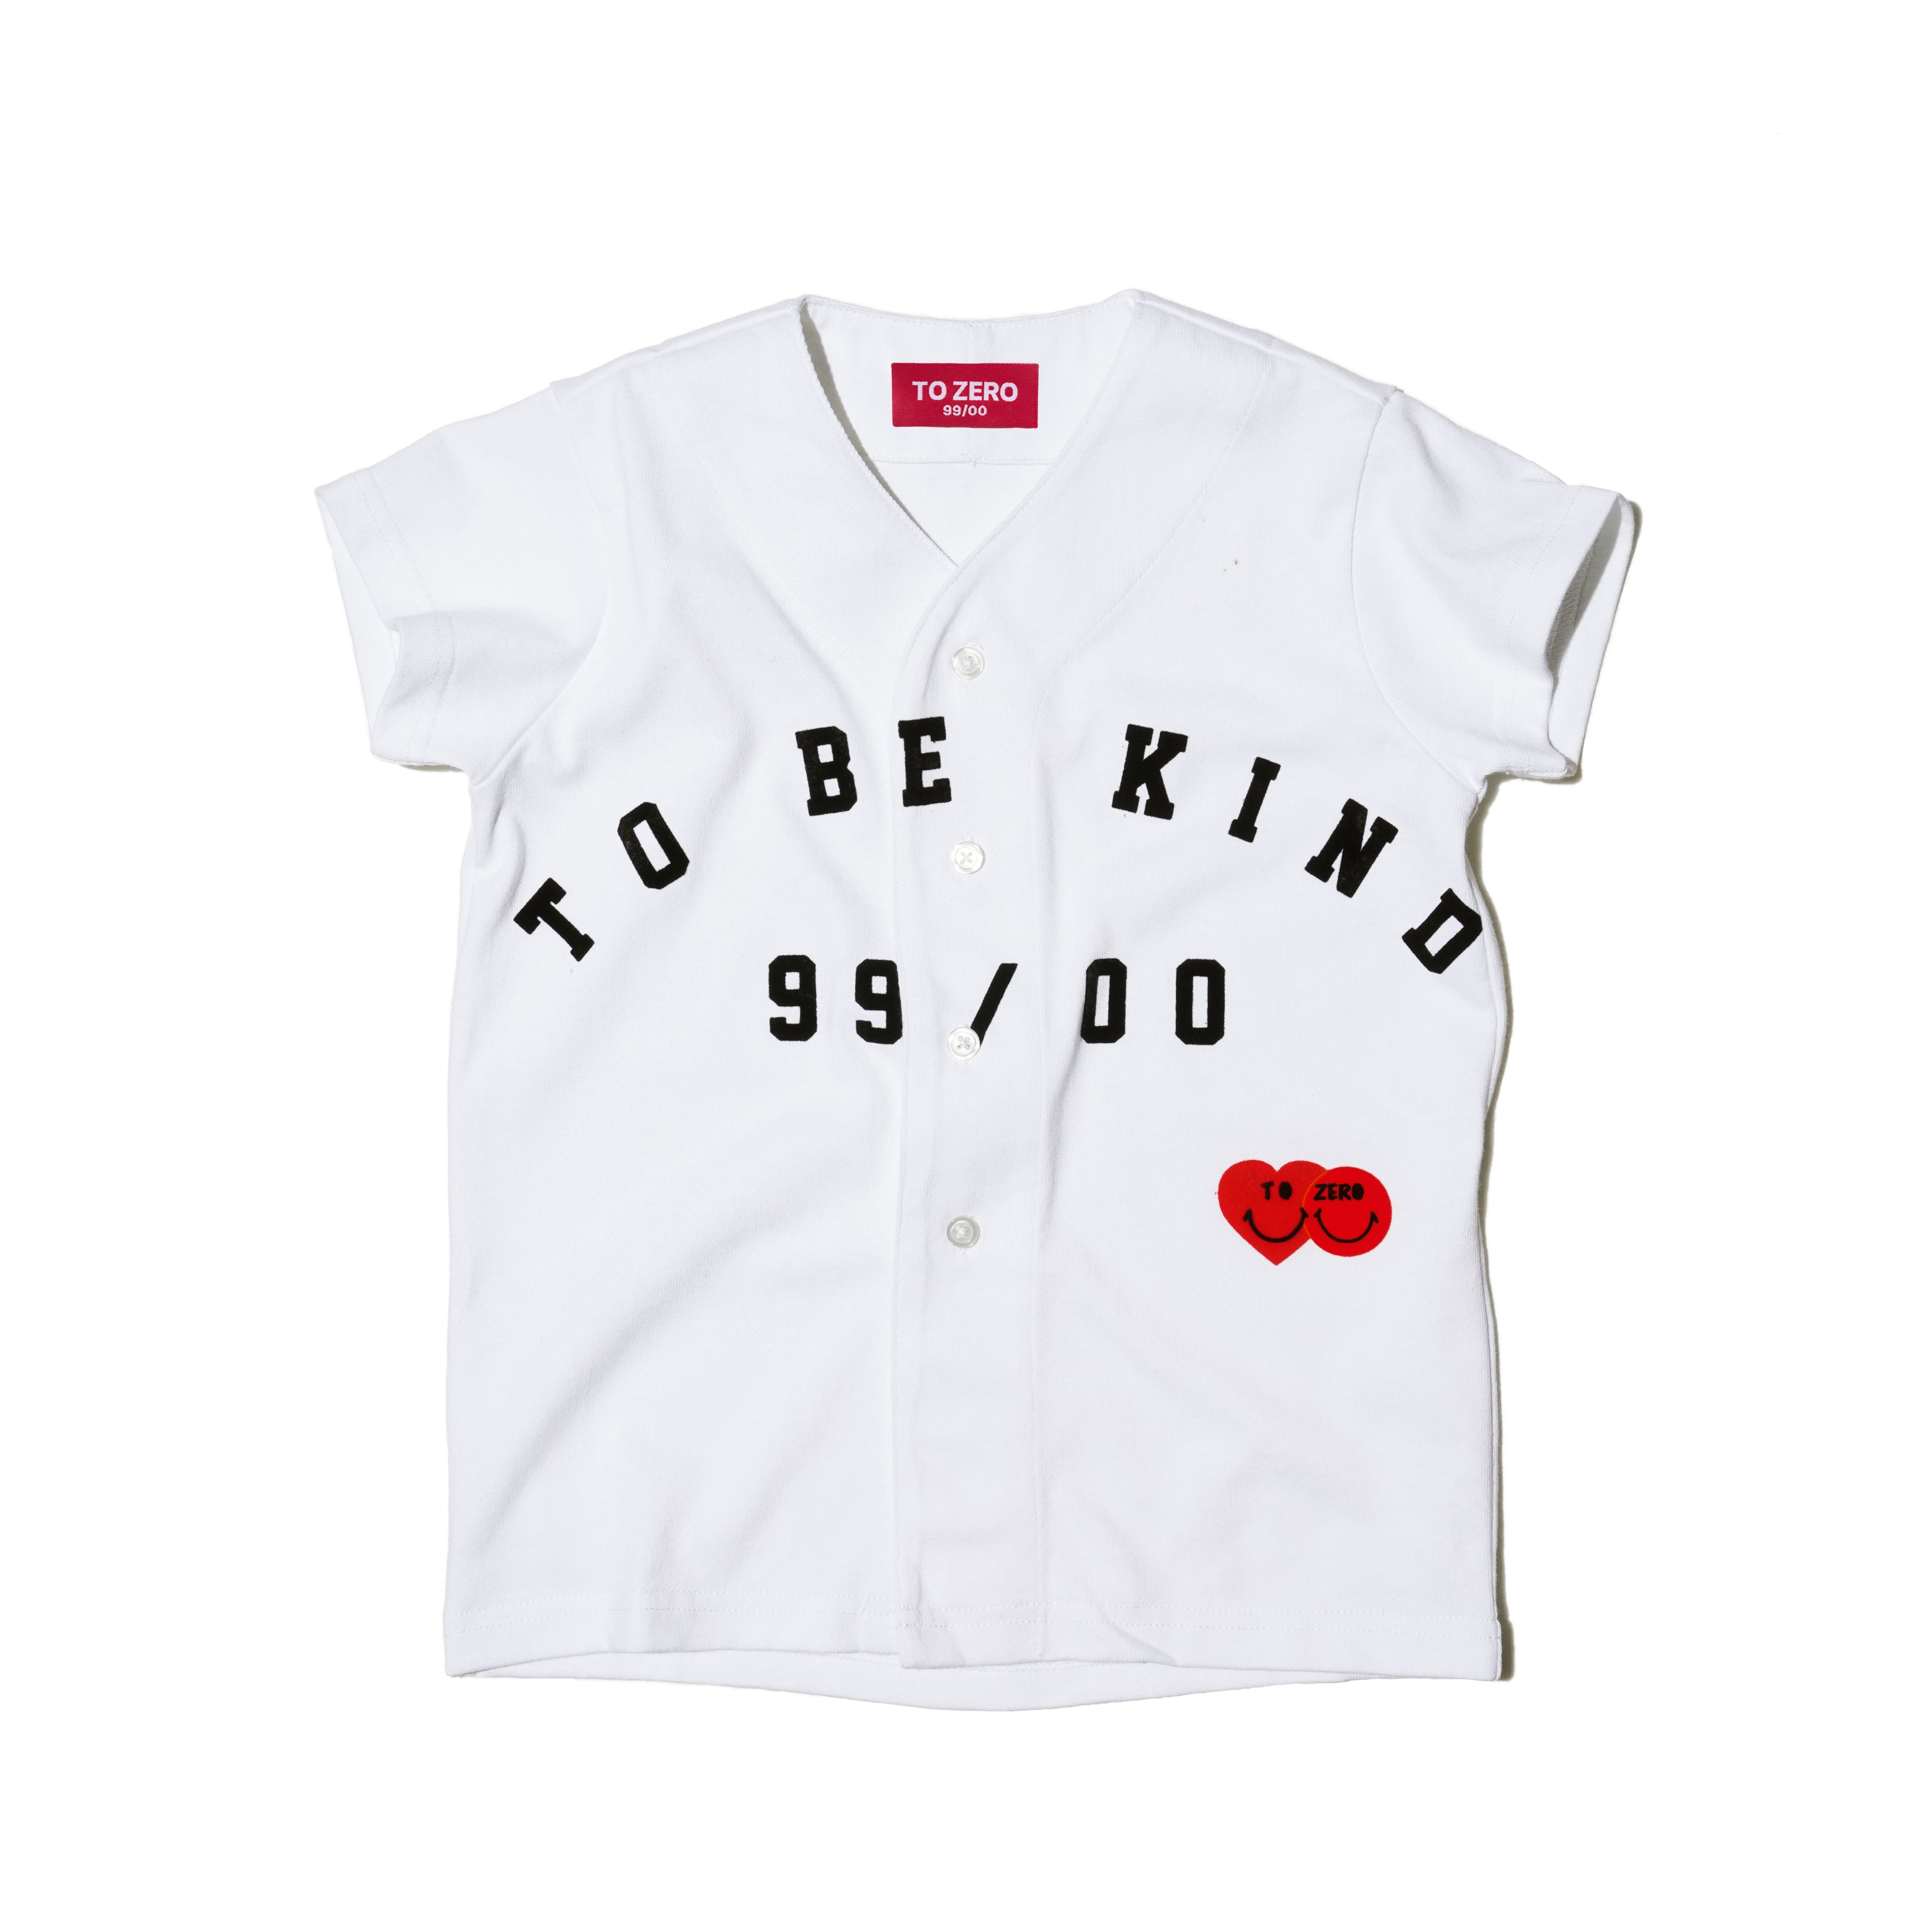 ‘TO BE KIND’ 兒童植絨印花棒球T恤 